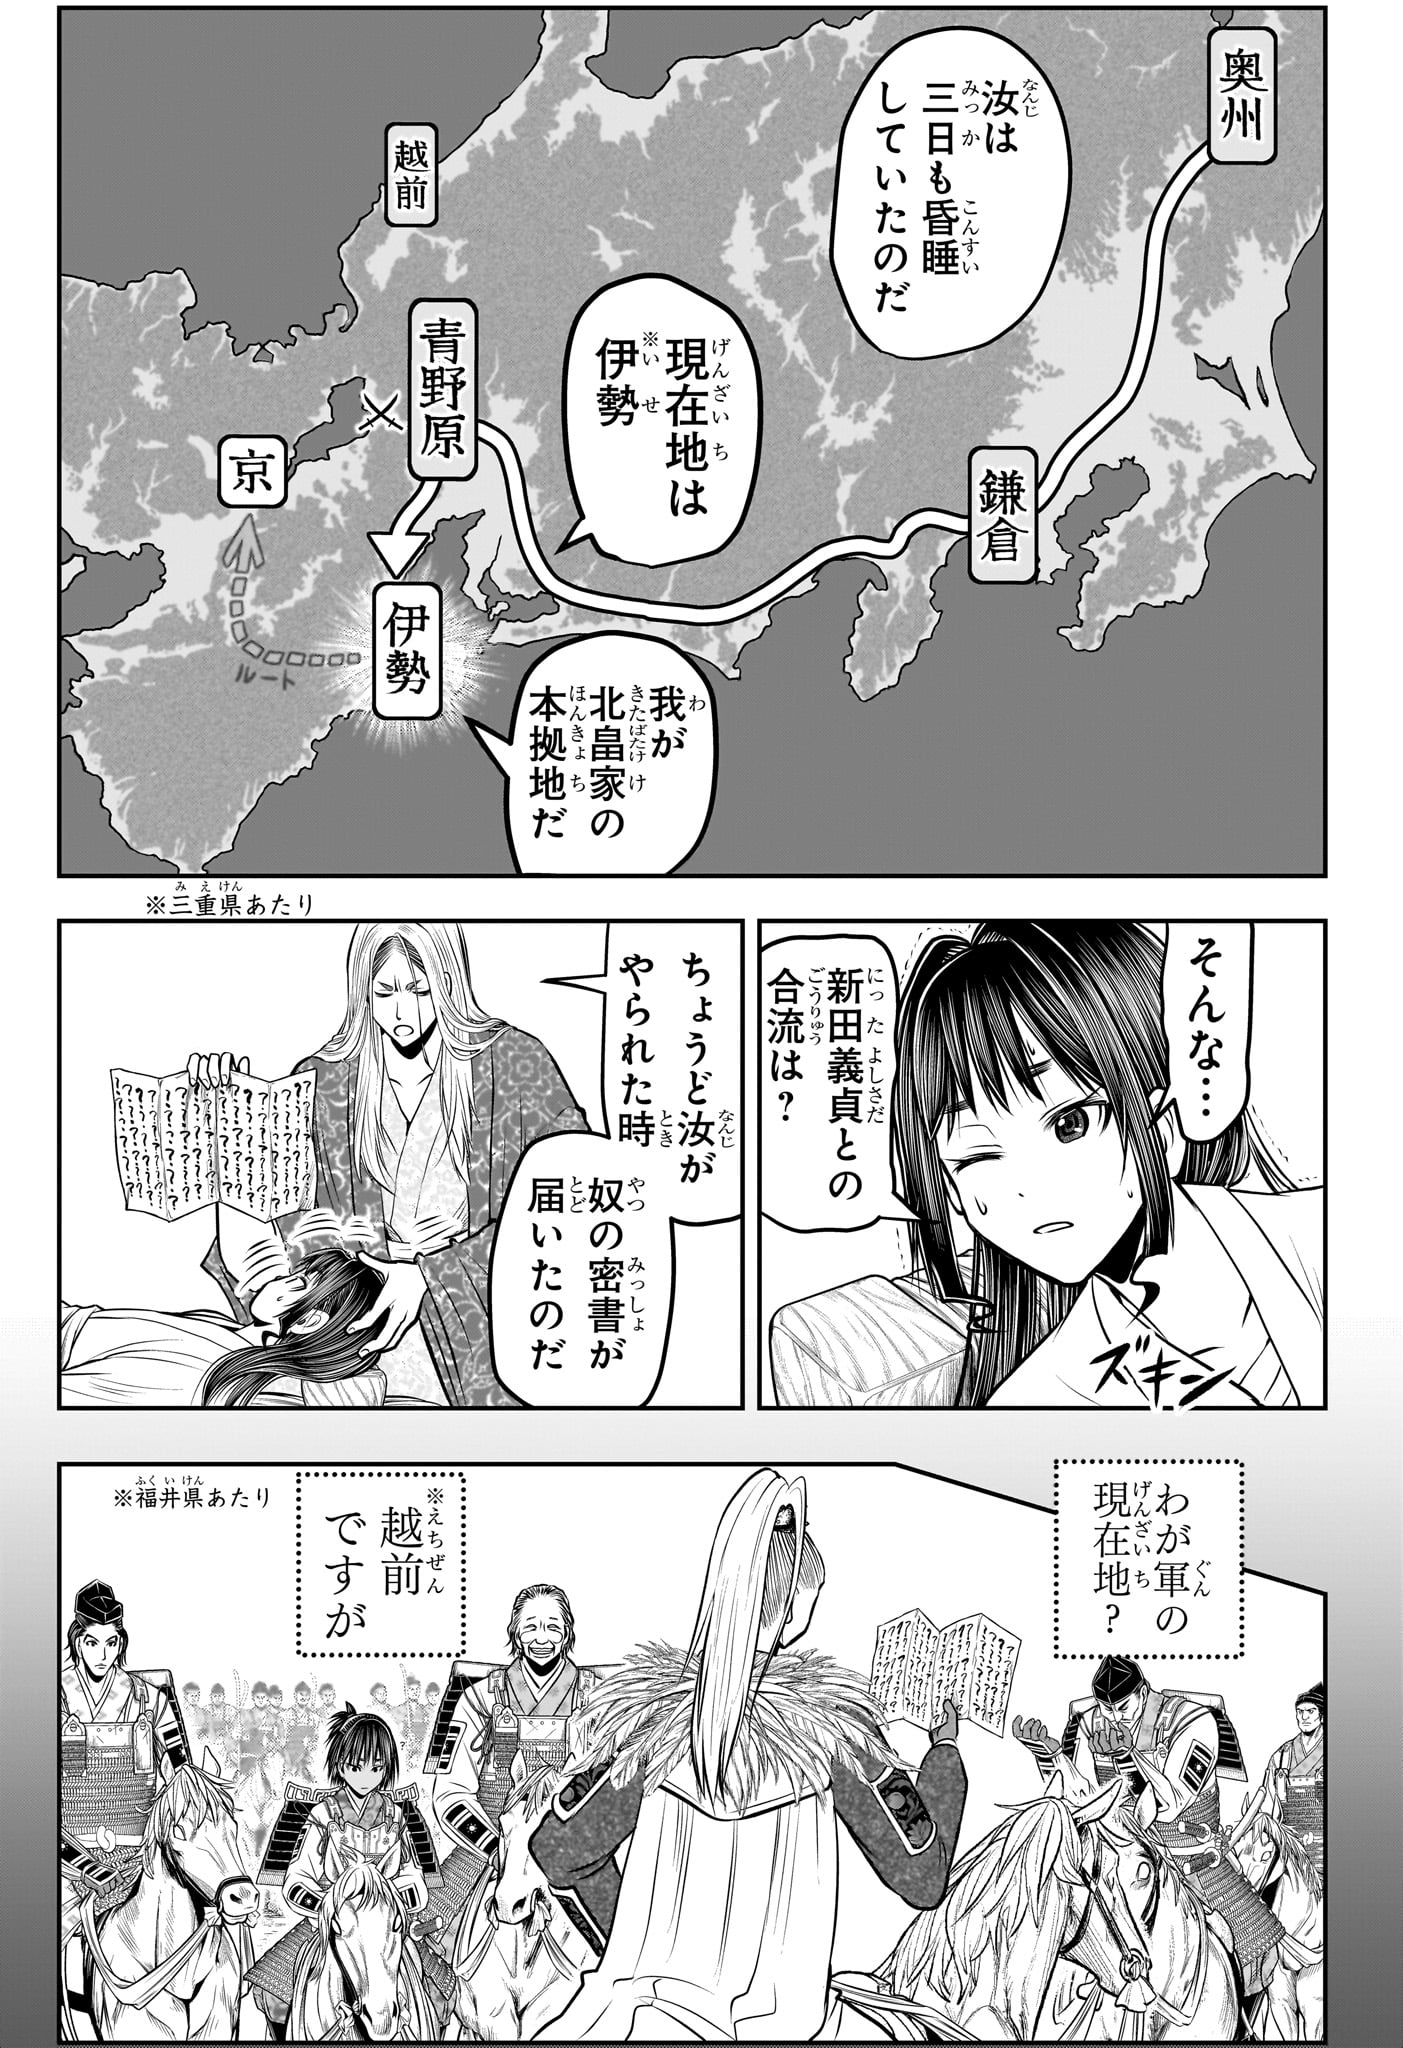 Nige Jouzu no Wakagimi - Chapter 148 - Page 5